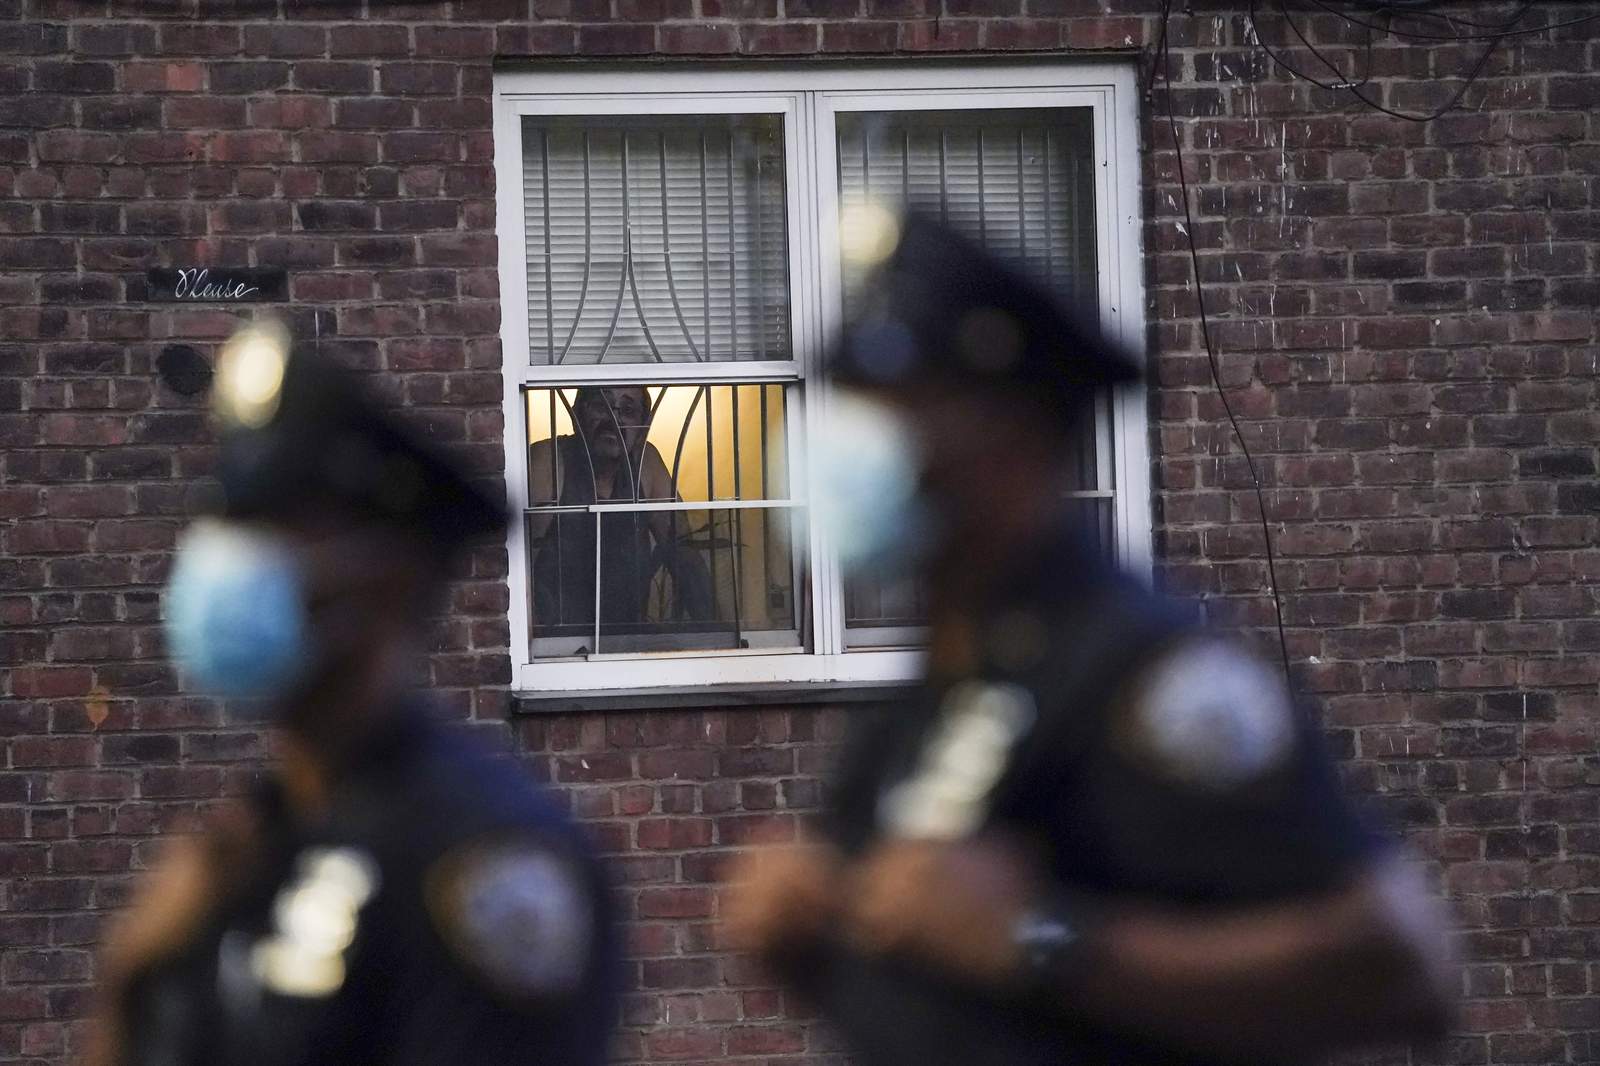 'Dark period': Killings spike in NYC amid pandemic, unrest